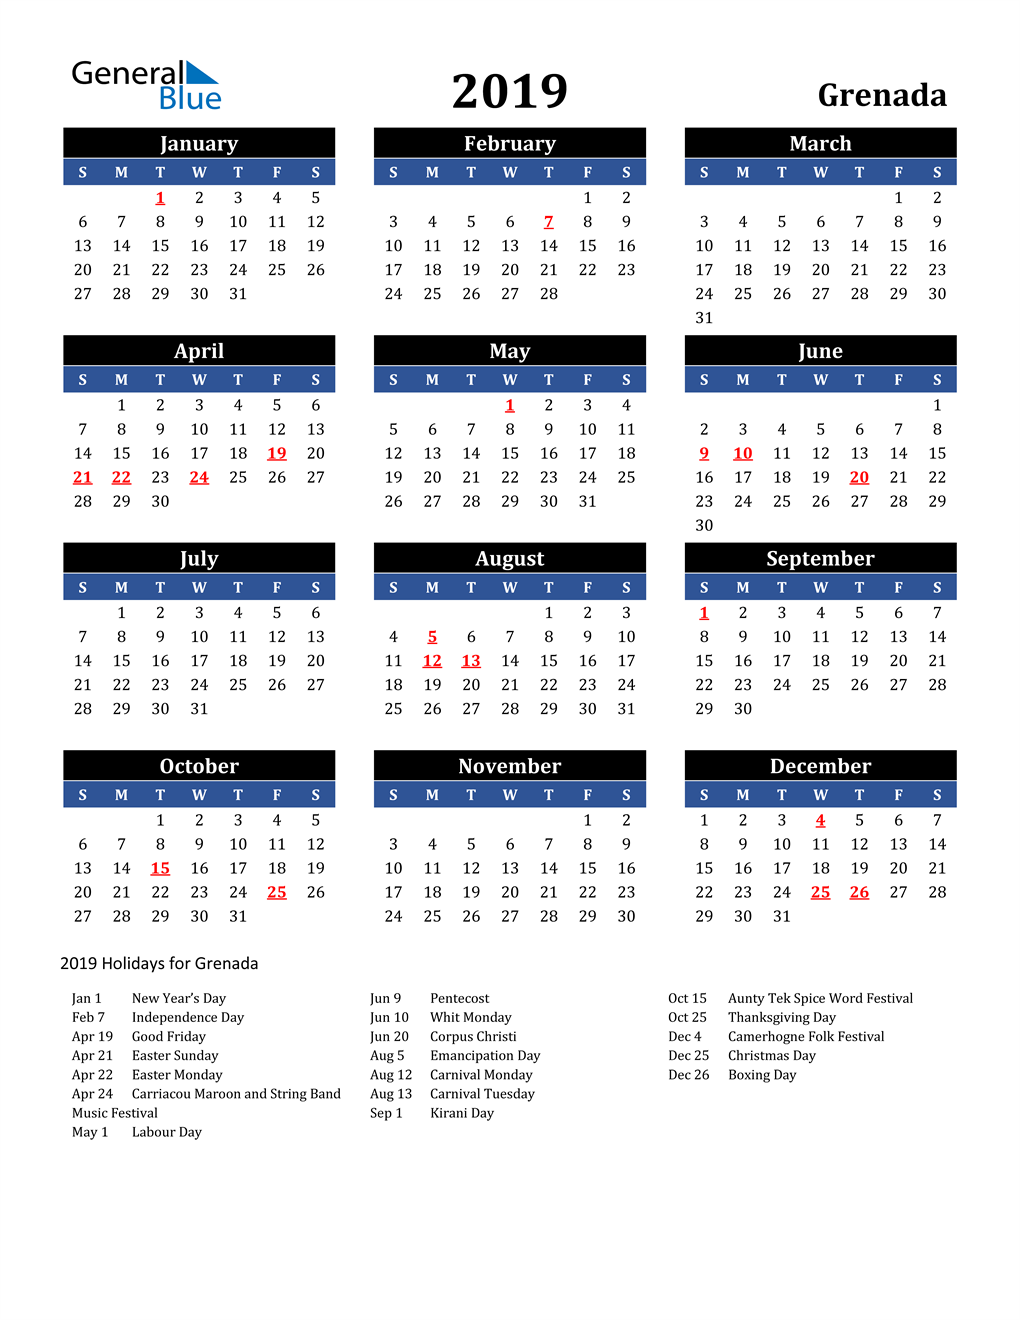 2019 Grenada Calendar with Holidays